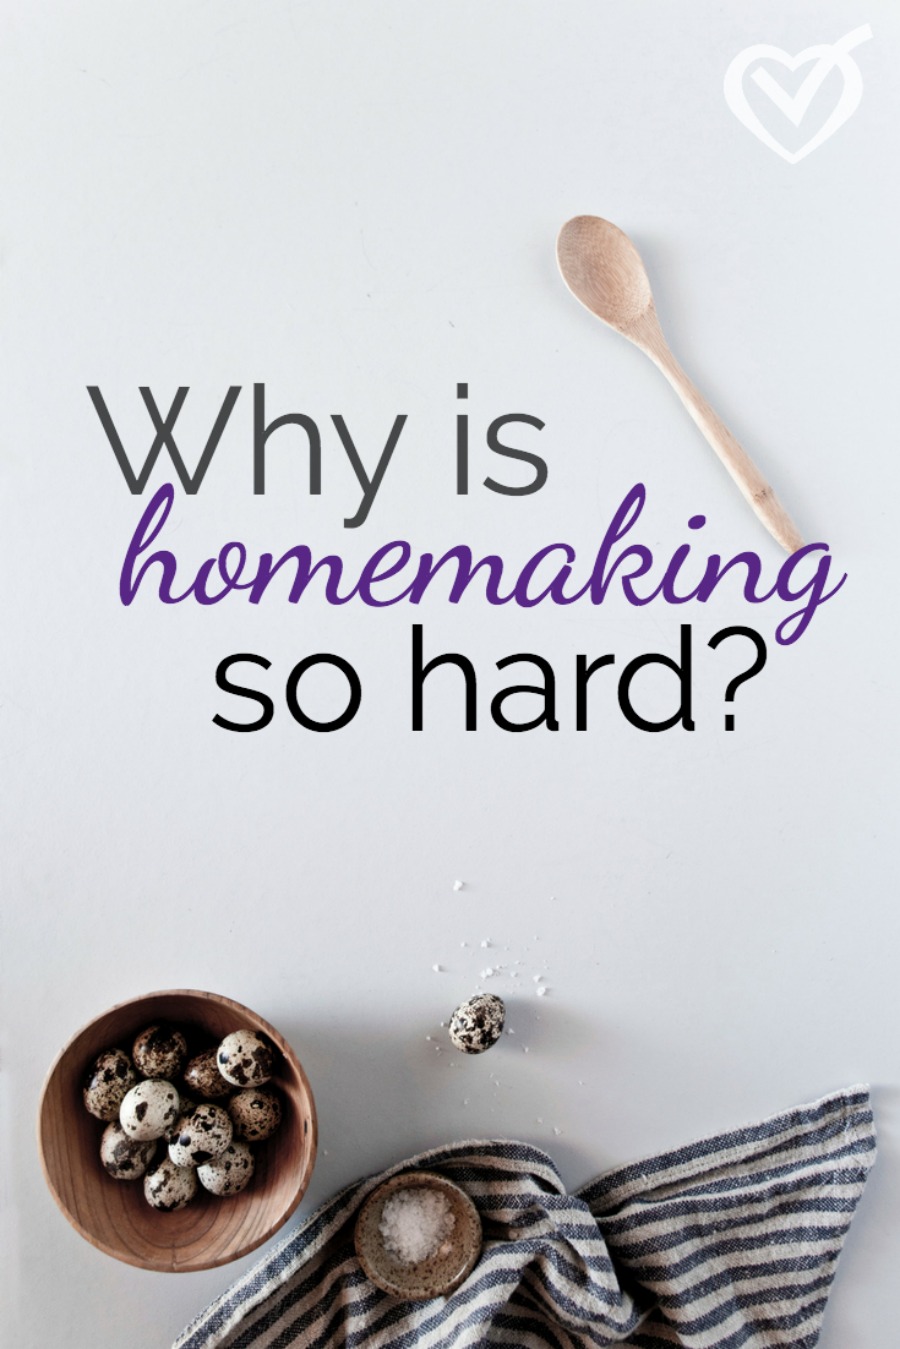 Why is homemaking hard?